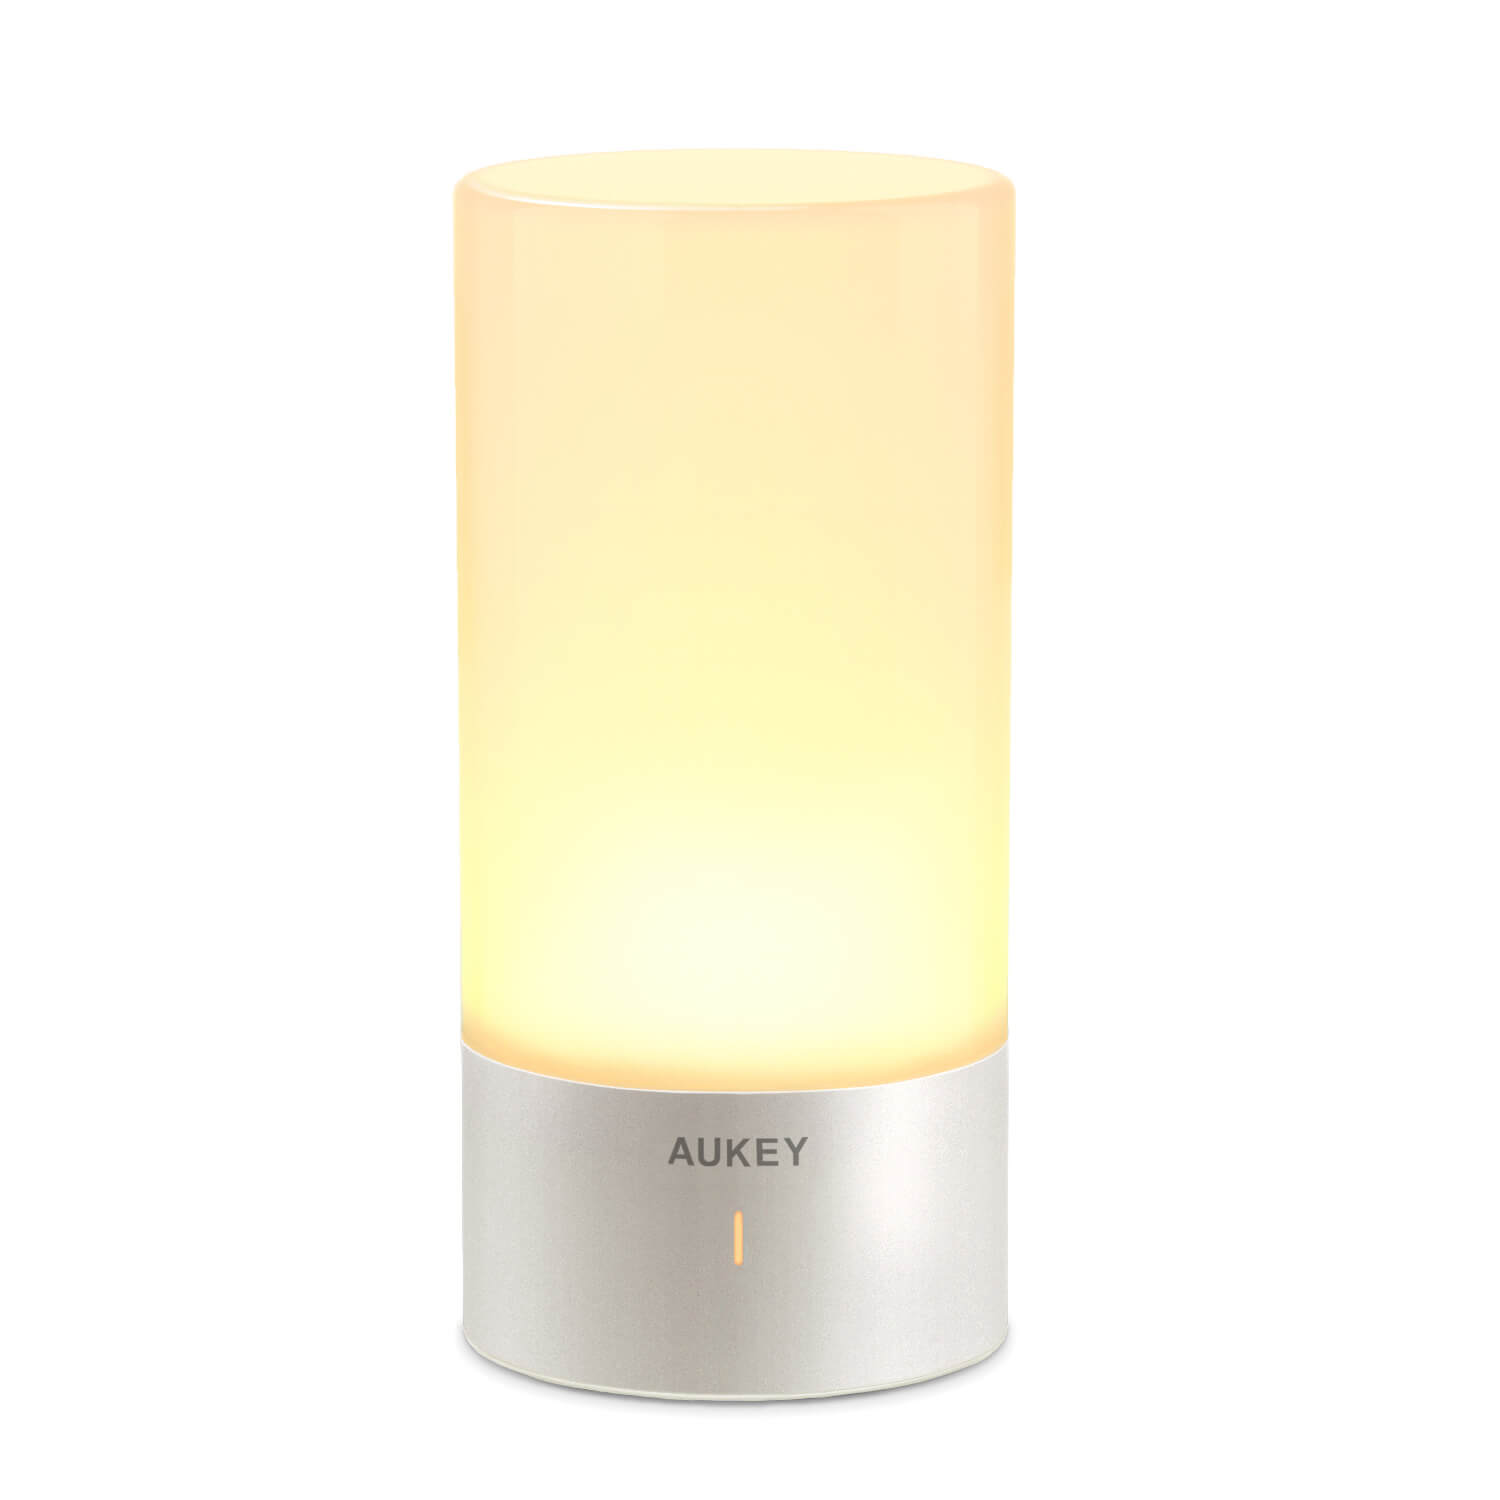 aukey lamp manual